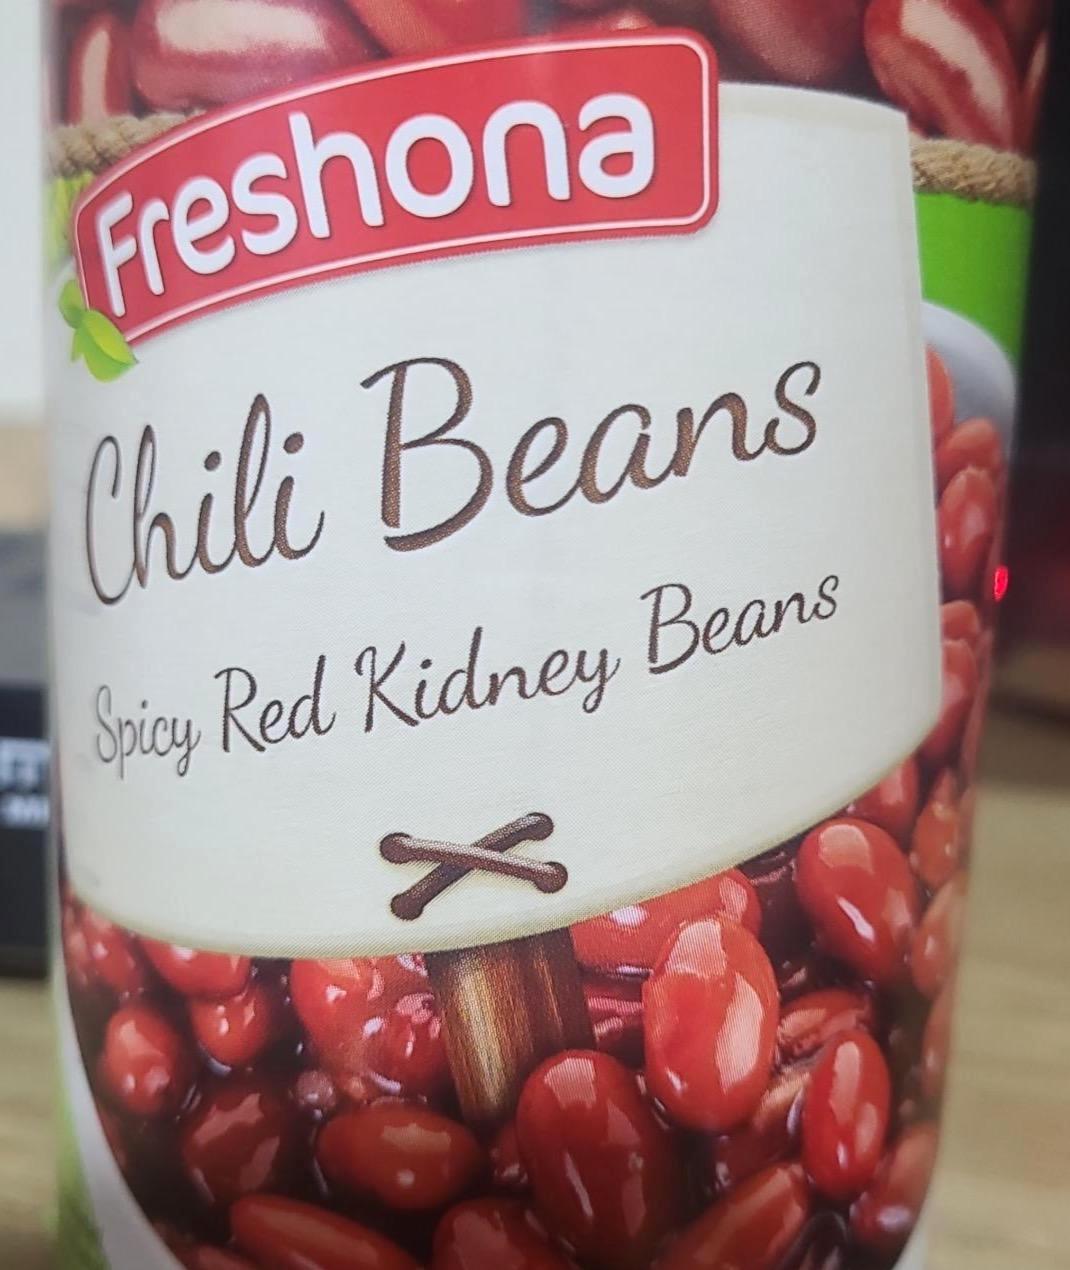 Képek - Chili beans Spicy red kidney beans Freshona